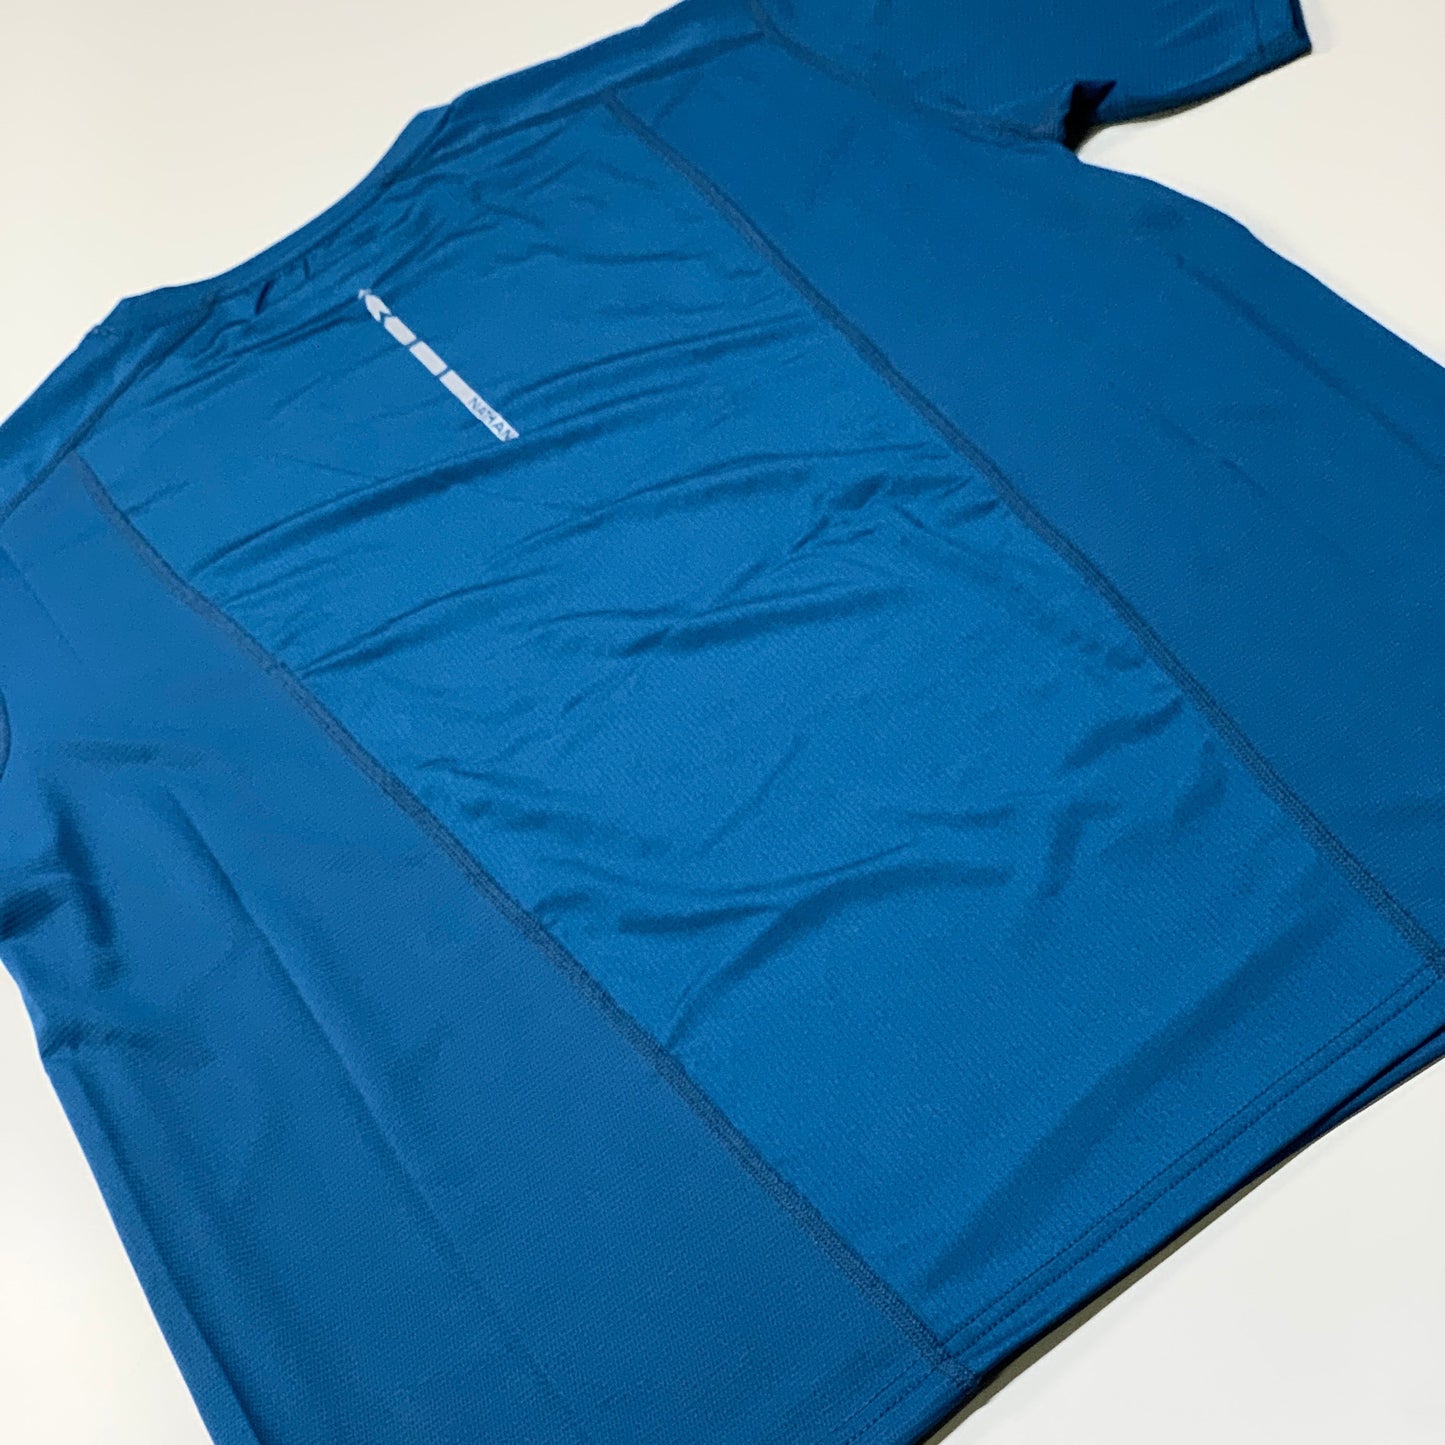 NATHAN Raise Short Sleeve Shirt Tee 2.0 Men's Sailor Blue Size L NS50880-60062-L